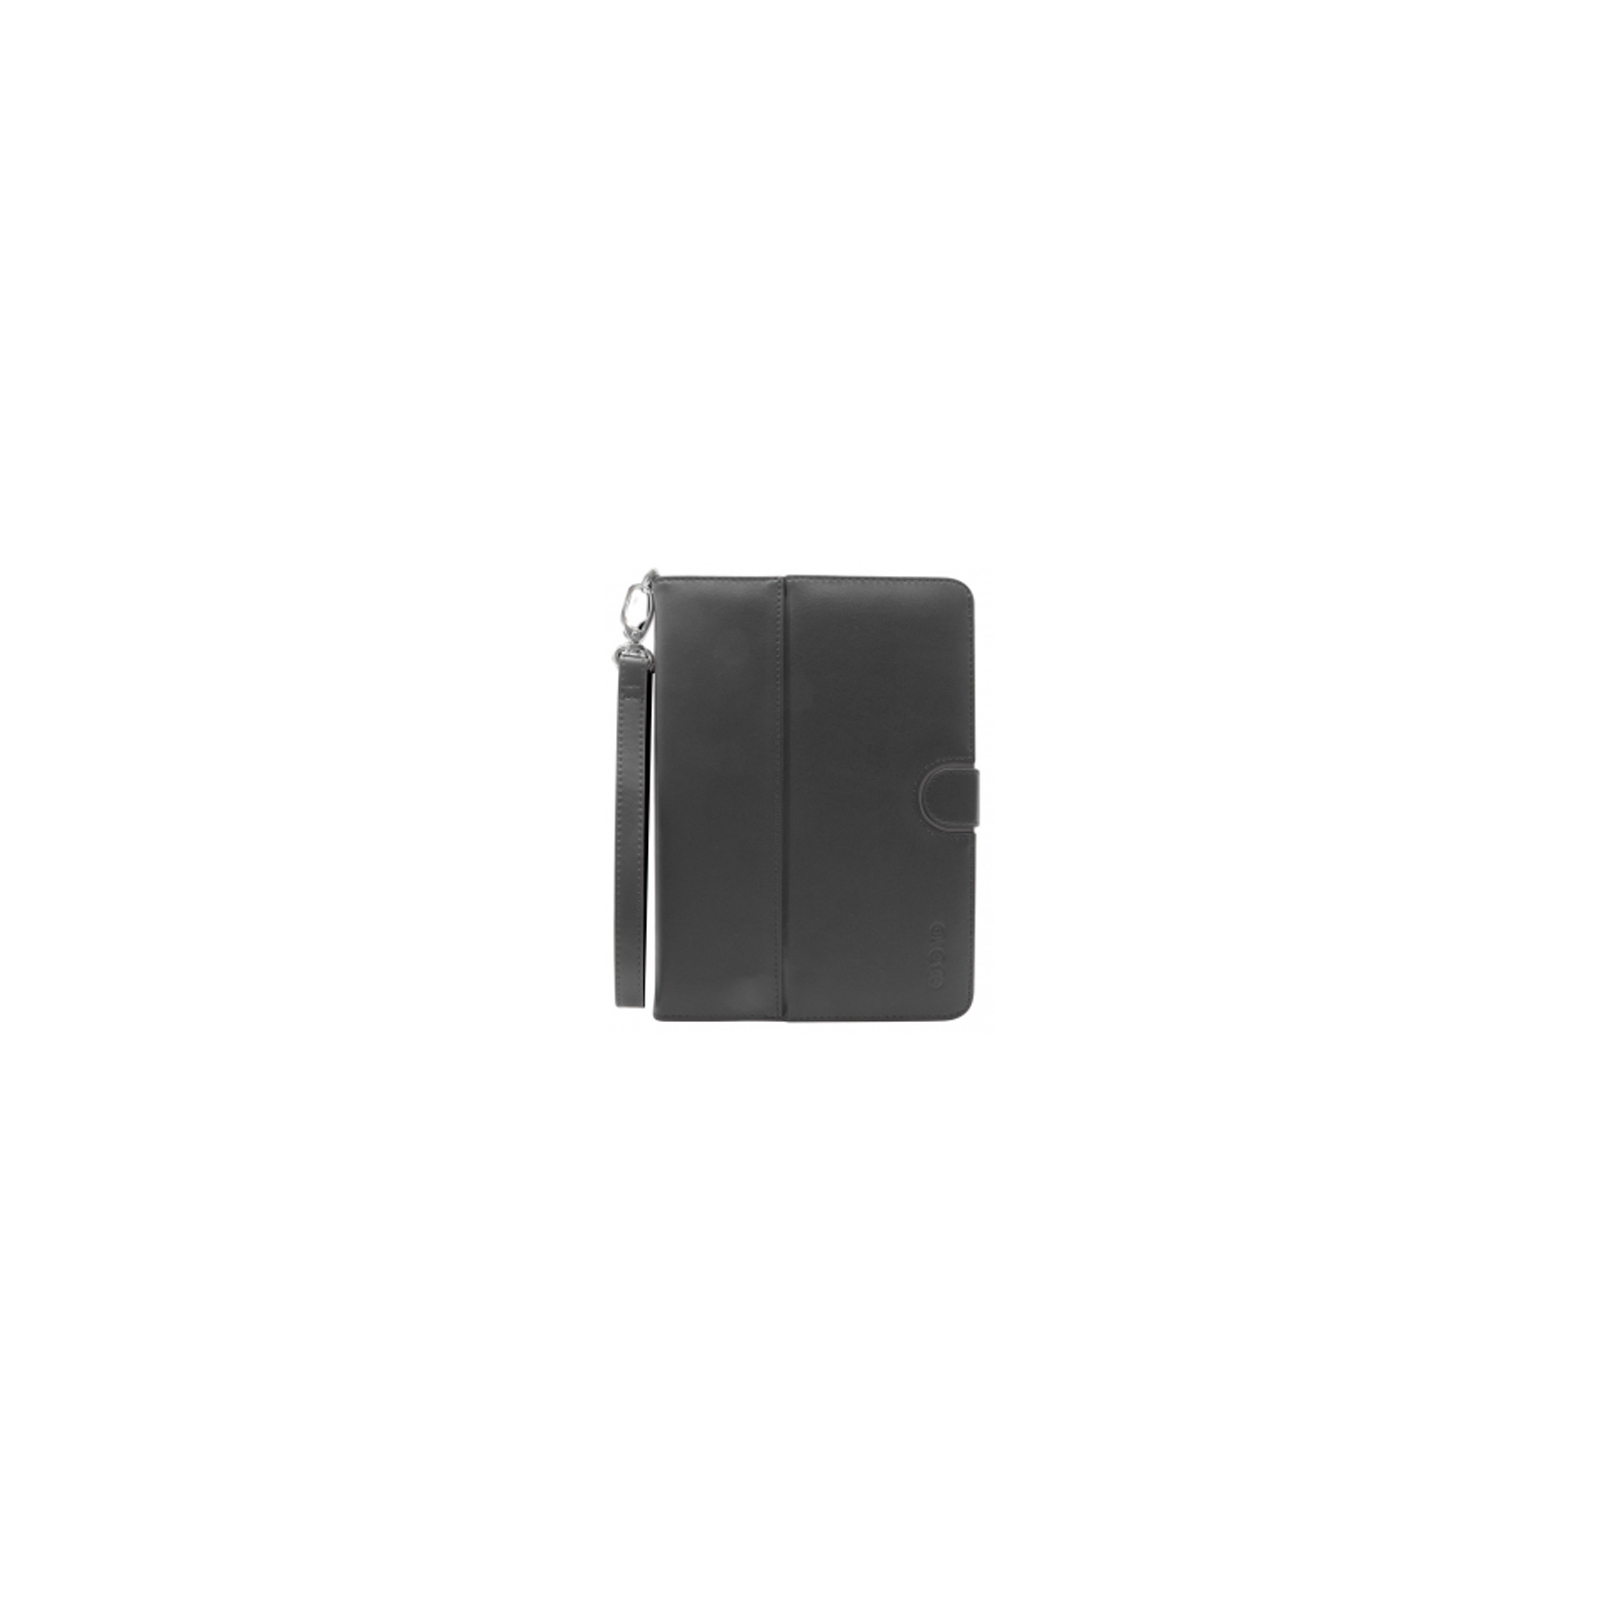 Чехол для планшета Odoyo IPAD MINI /GENUINE LEATHER FOLIO Black (PA529BK)